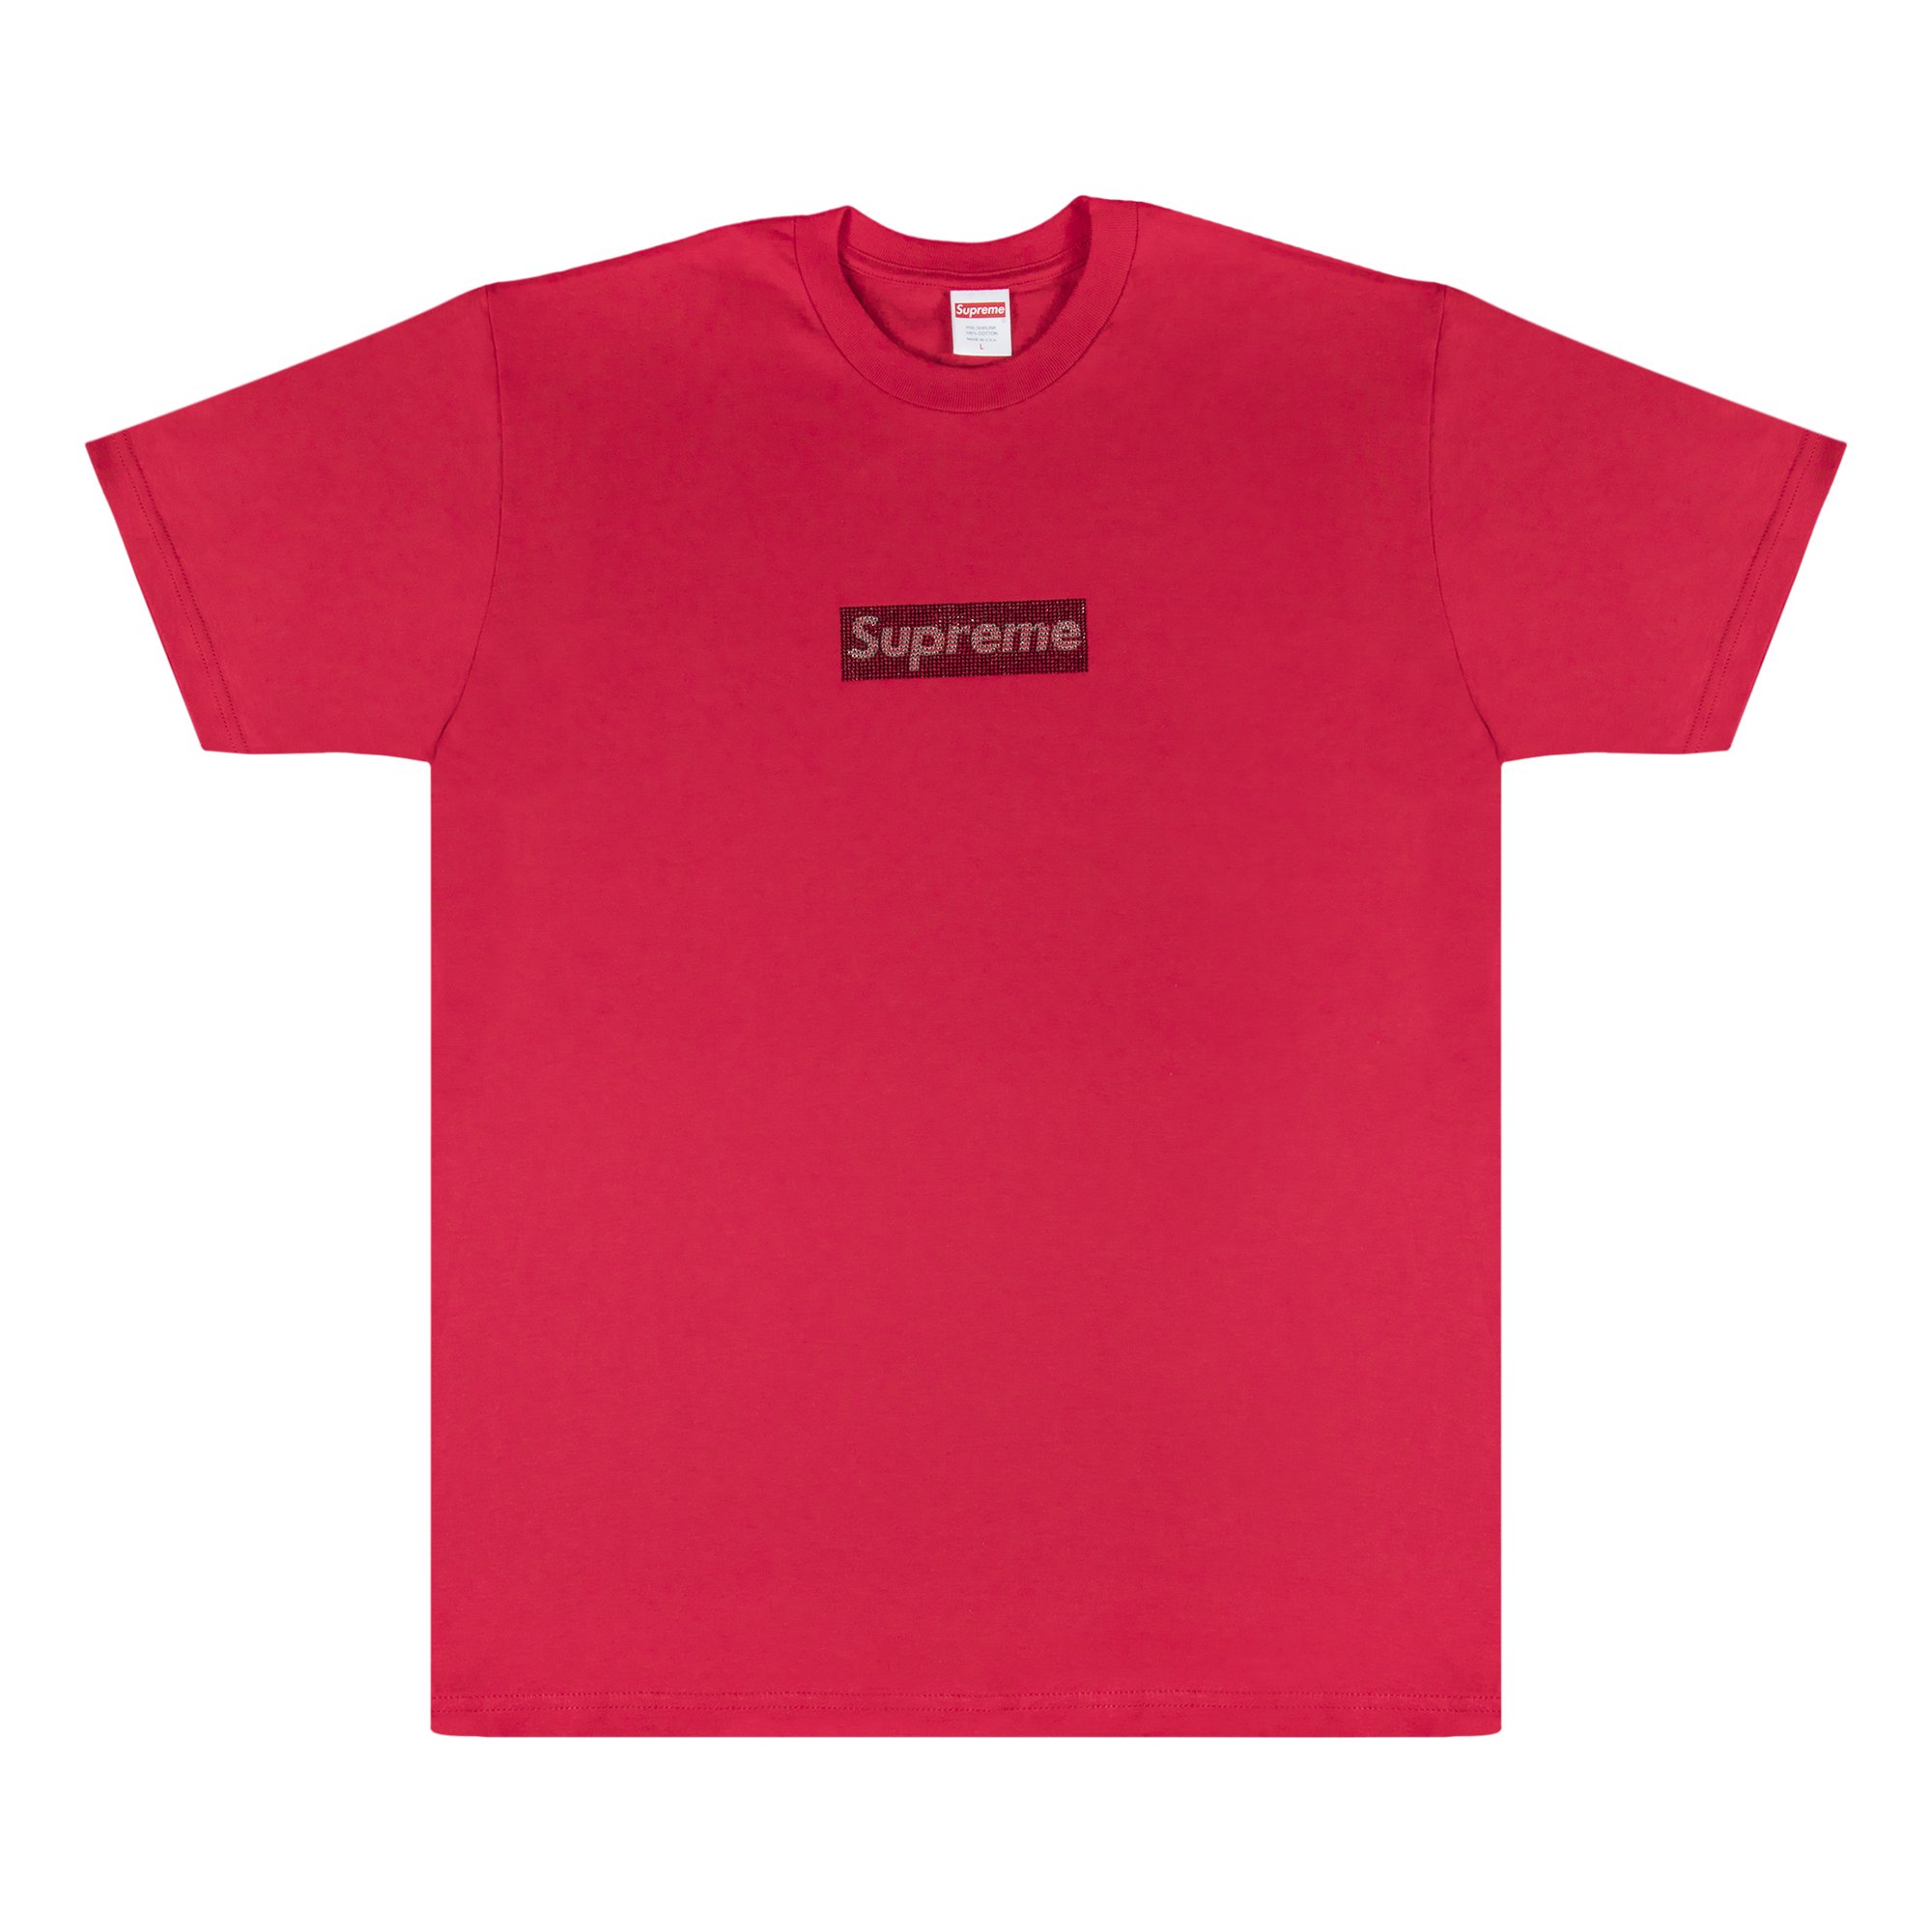 Buy Supreme x Swarovski Box Logo T-Shirt 'Red' - SS19T1 RED | GOAT